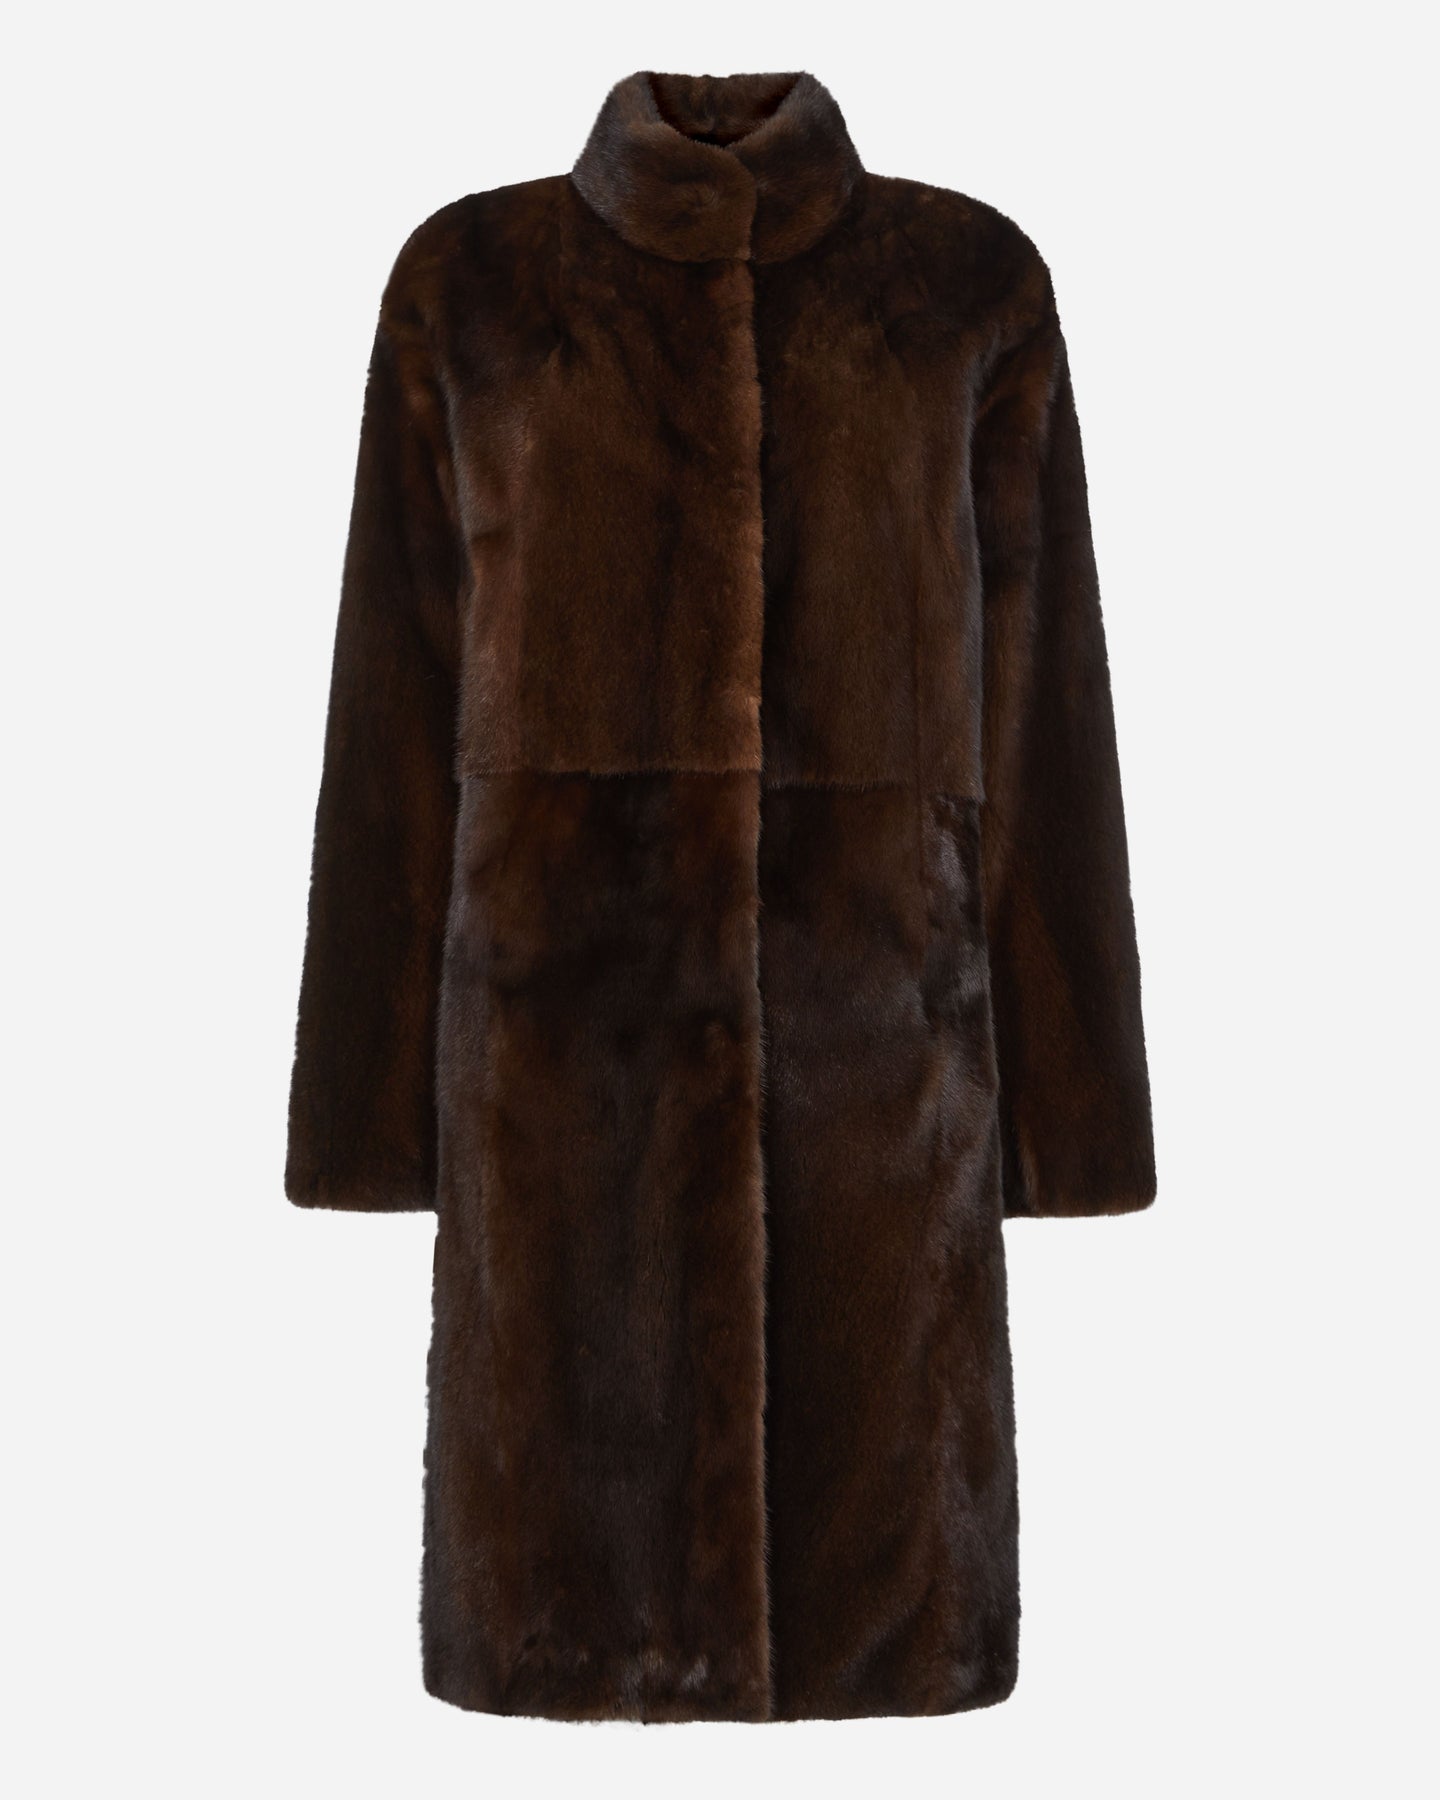 N.Peal Women's Classic Long Mink Coat Dark Brown